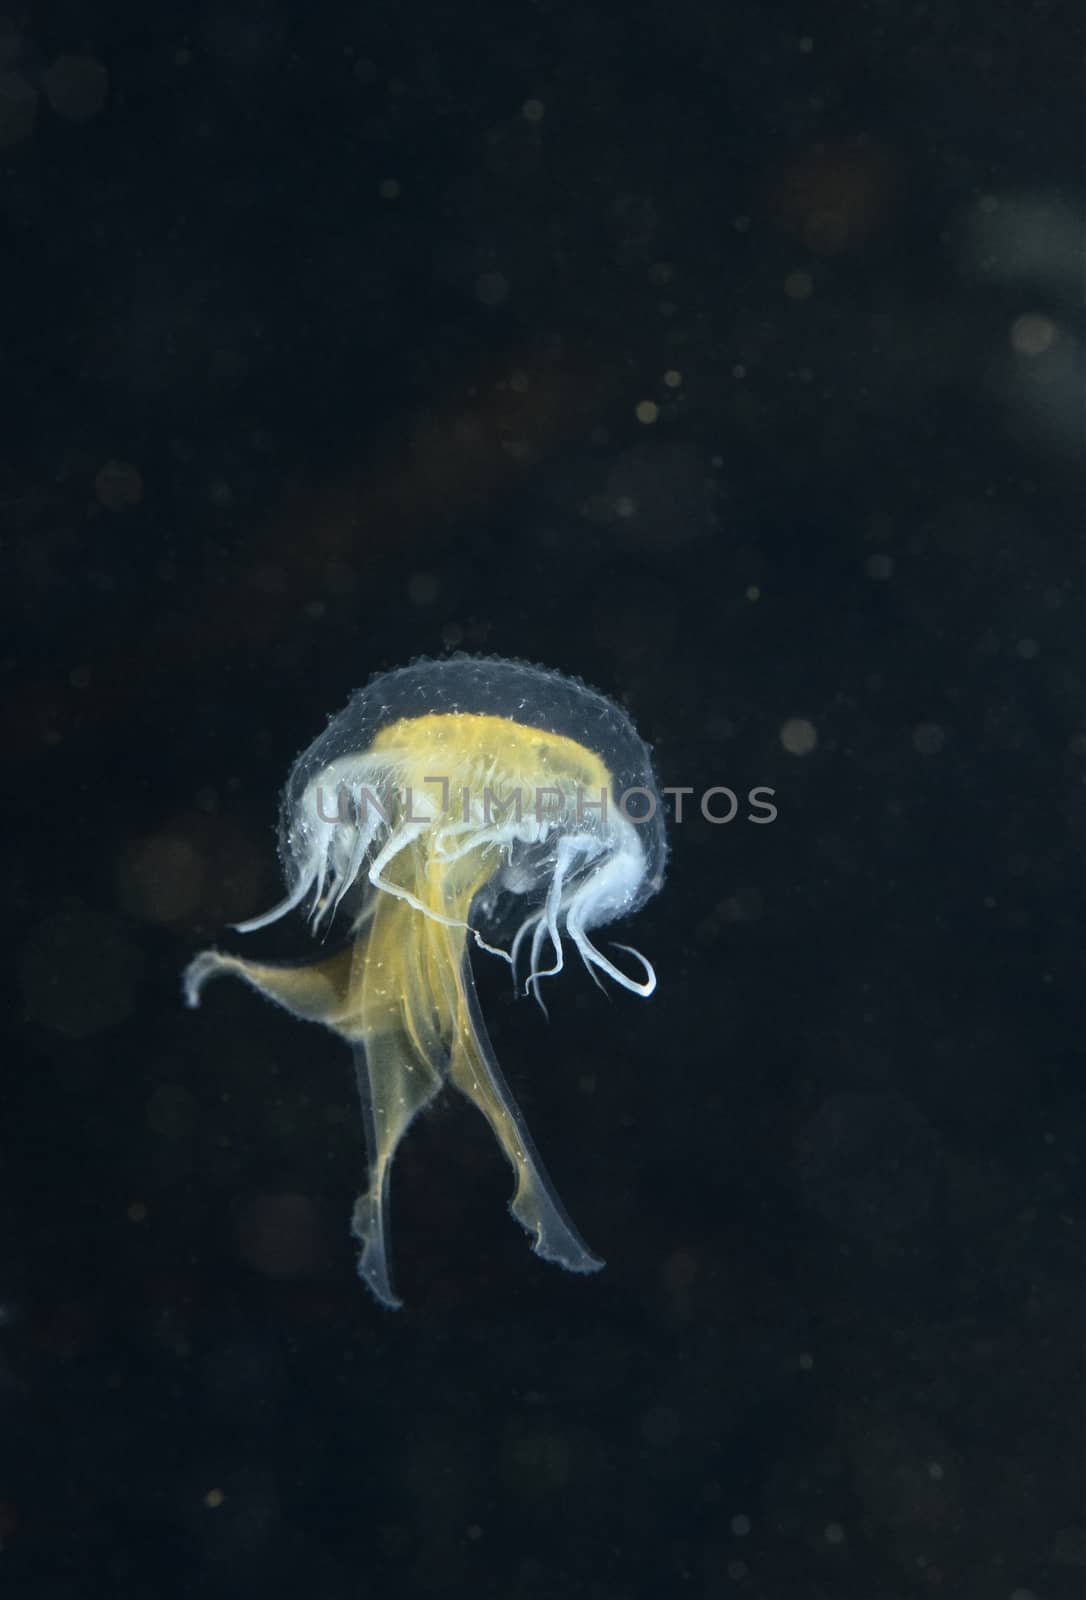 Jellyfish, jellies species off Anacapa Island, CA by Njean